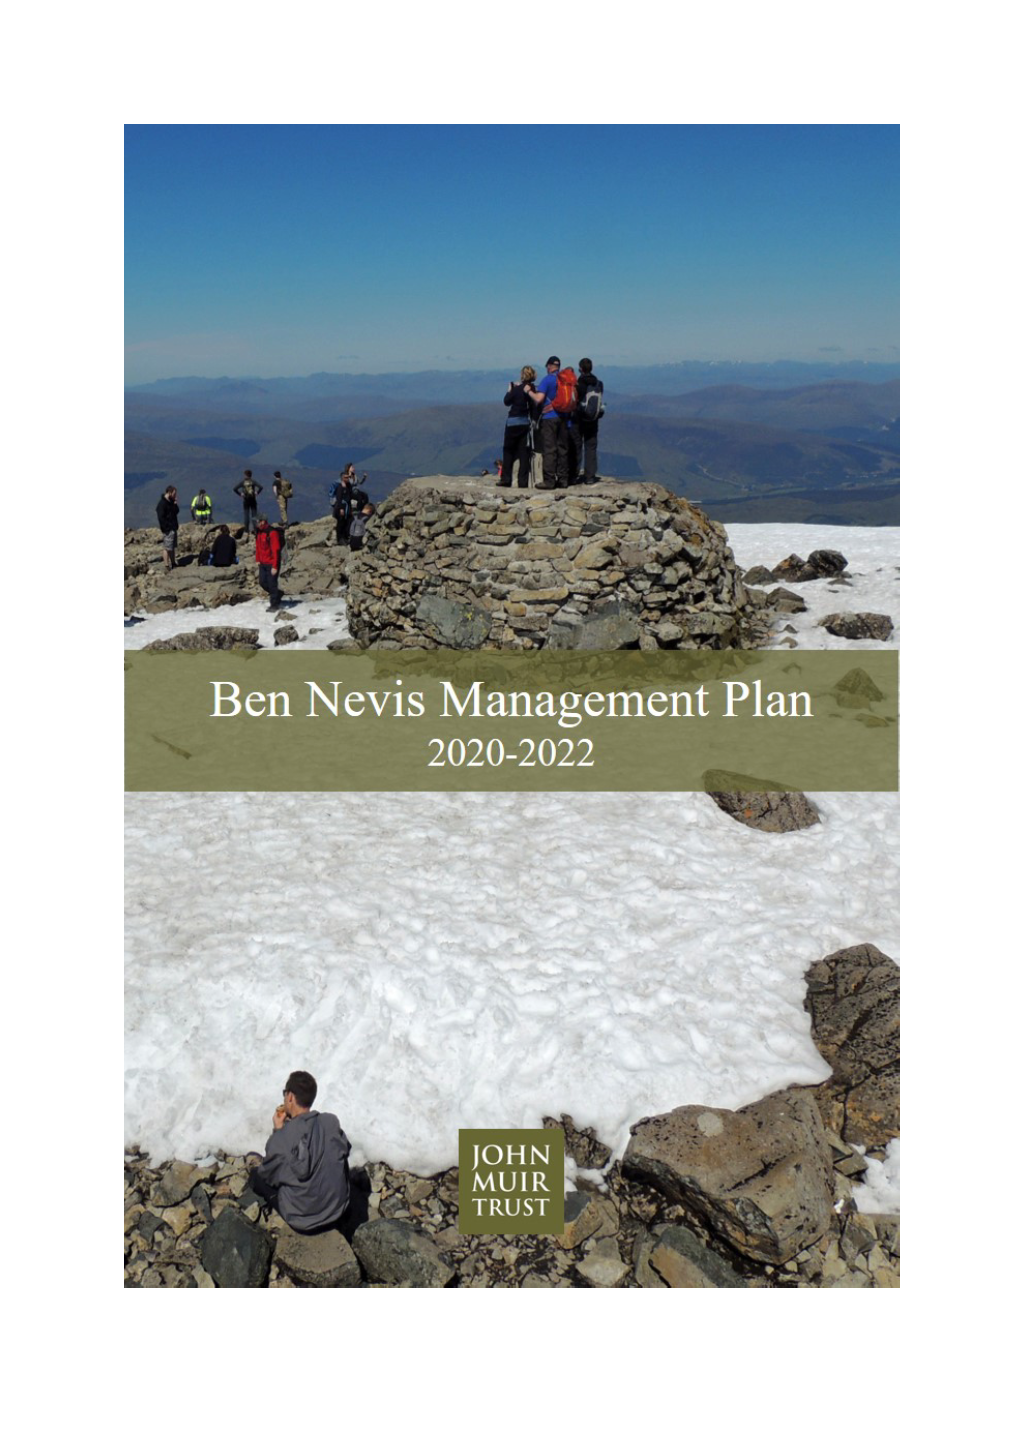 Ben Nevis Management Plan 2020-2022